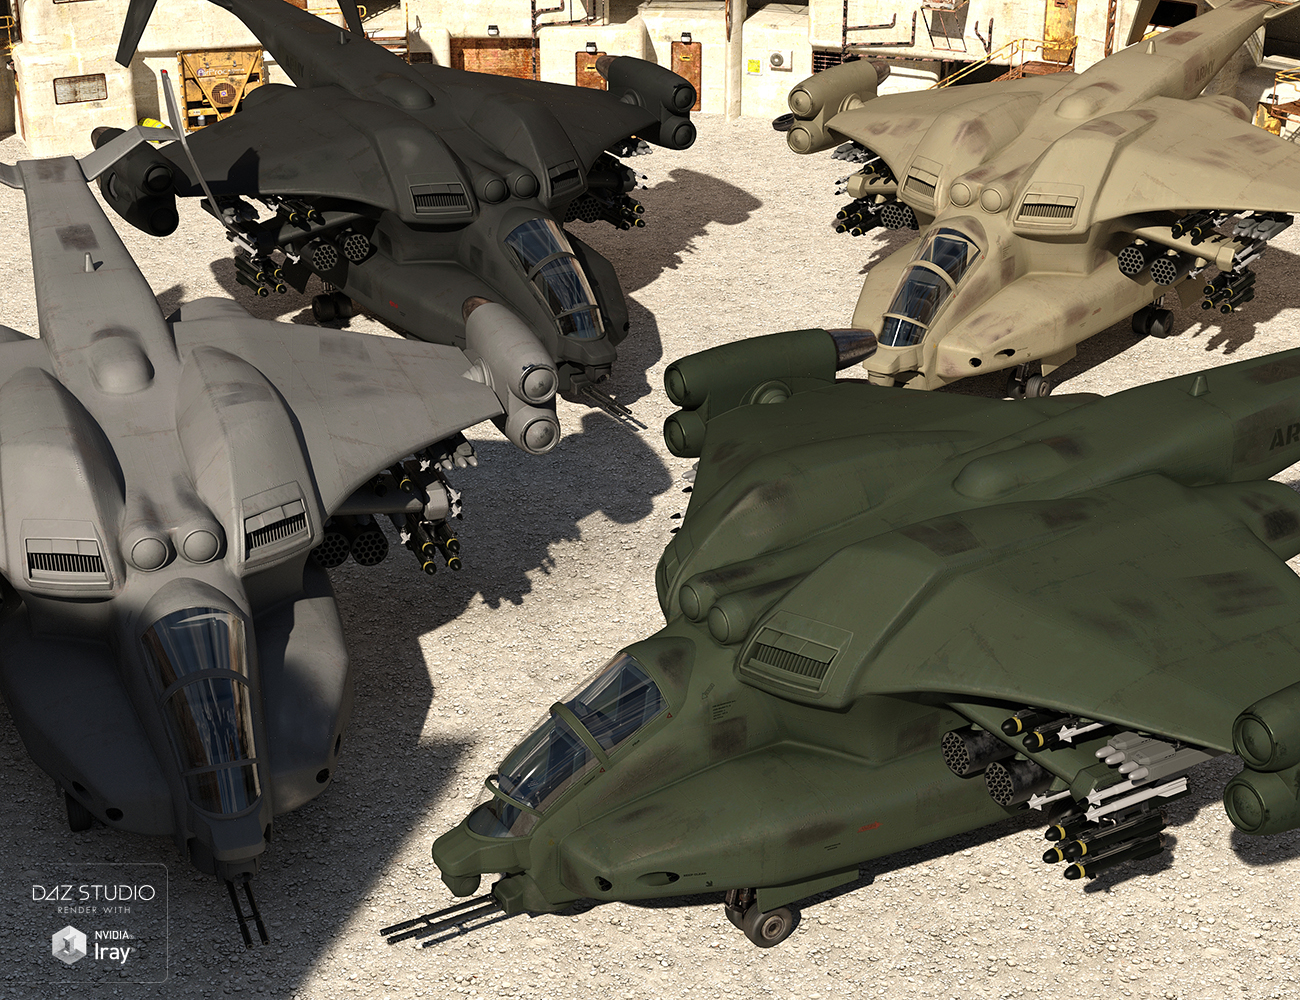 Gunship Dragonfly by: Porsimo, 3D Models by Daz 3D